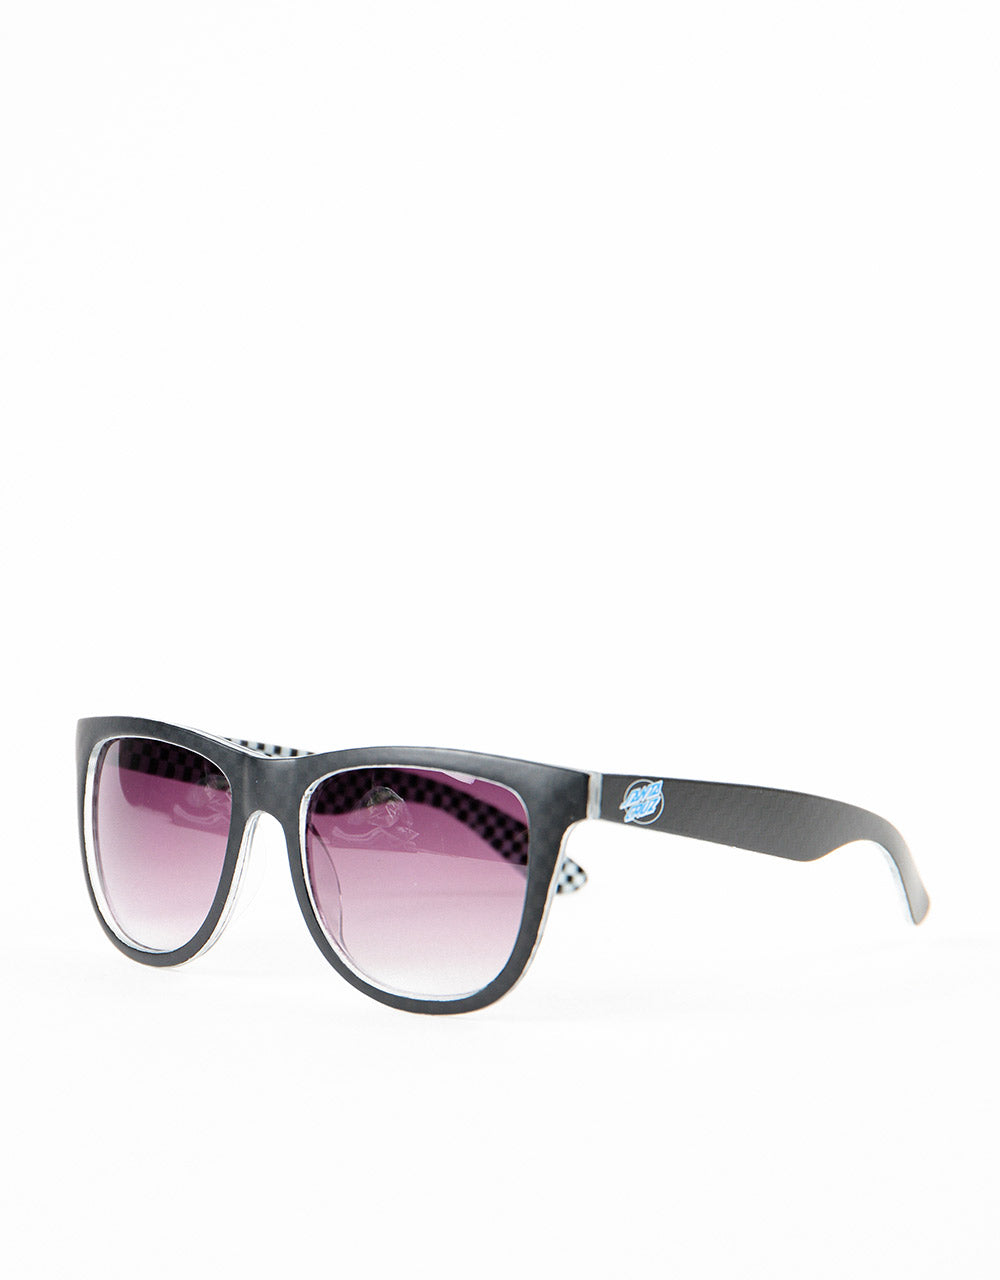 Santa Cruz Contest Oval Sunglasses - Black